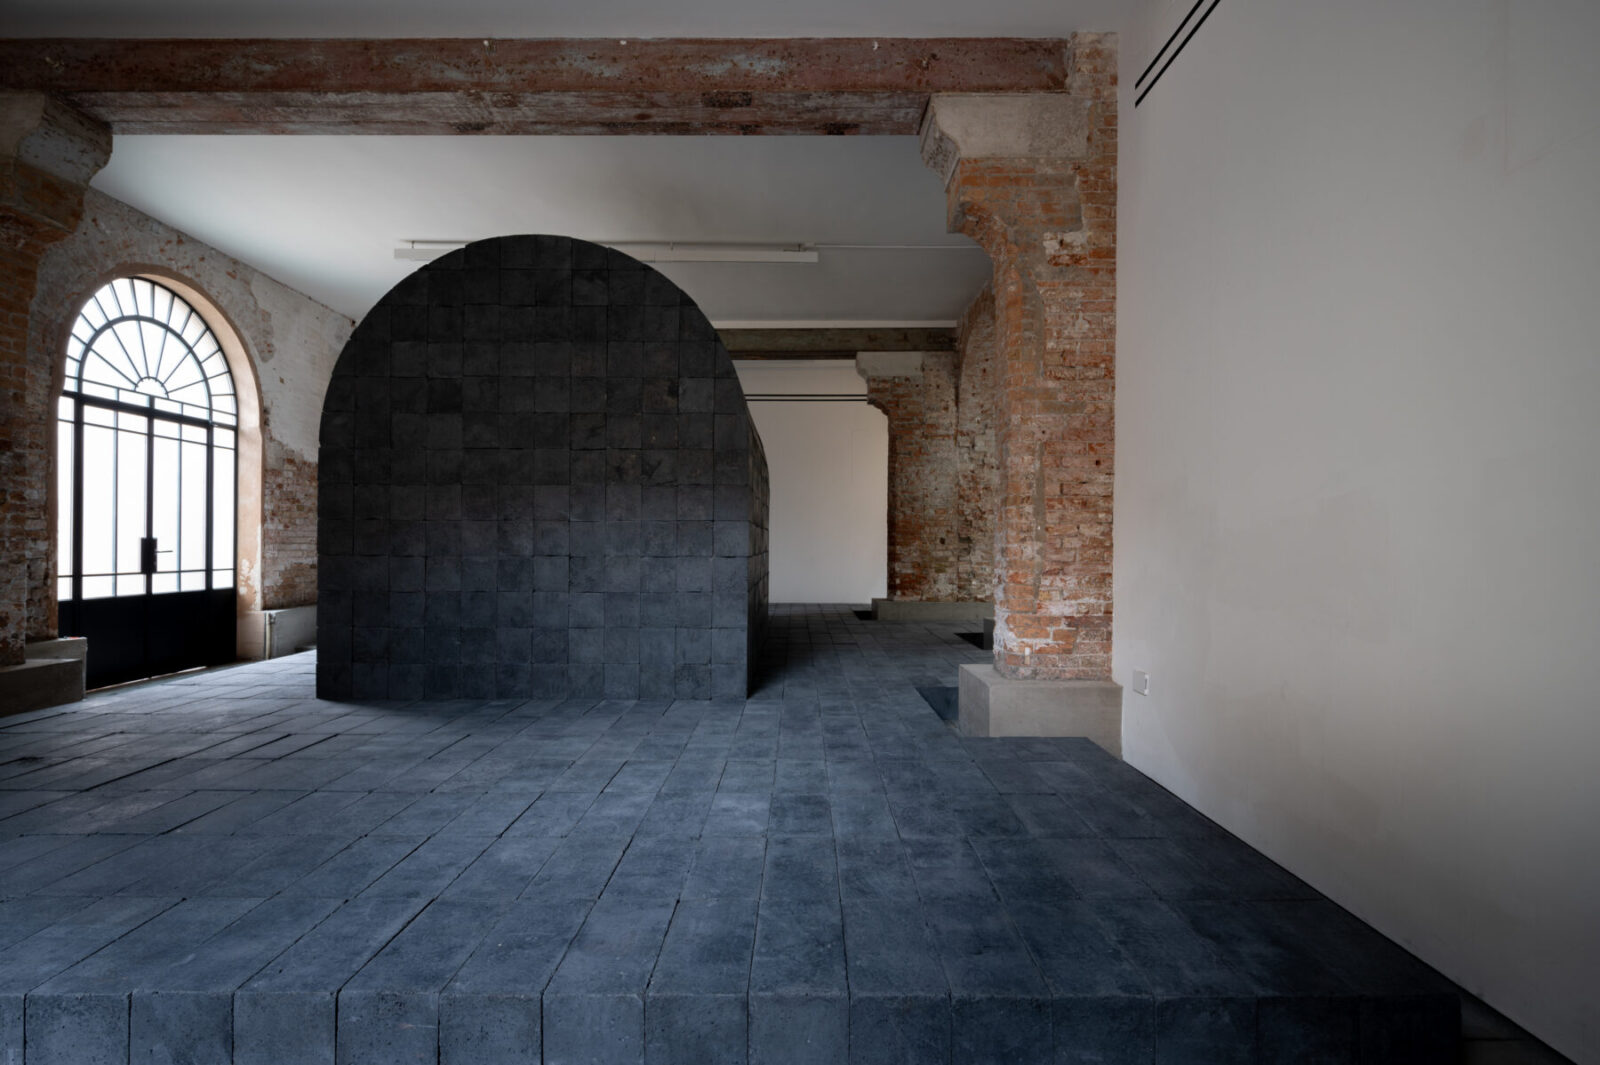 Archisearch Pavilion of Georgia | at the 18th International Architecture Exhibition – La Biennale di Venezia